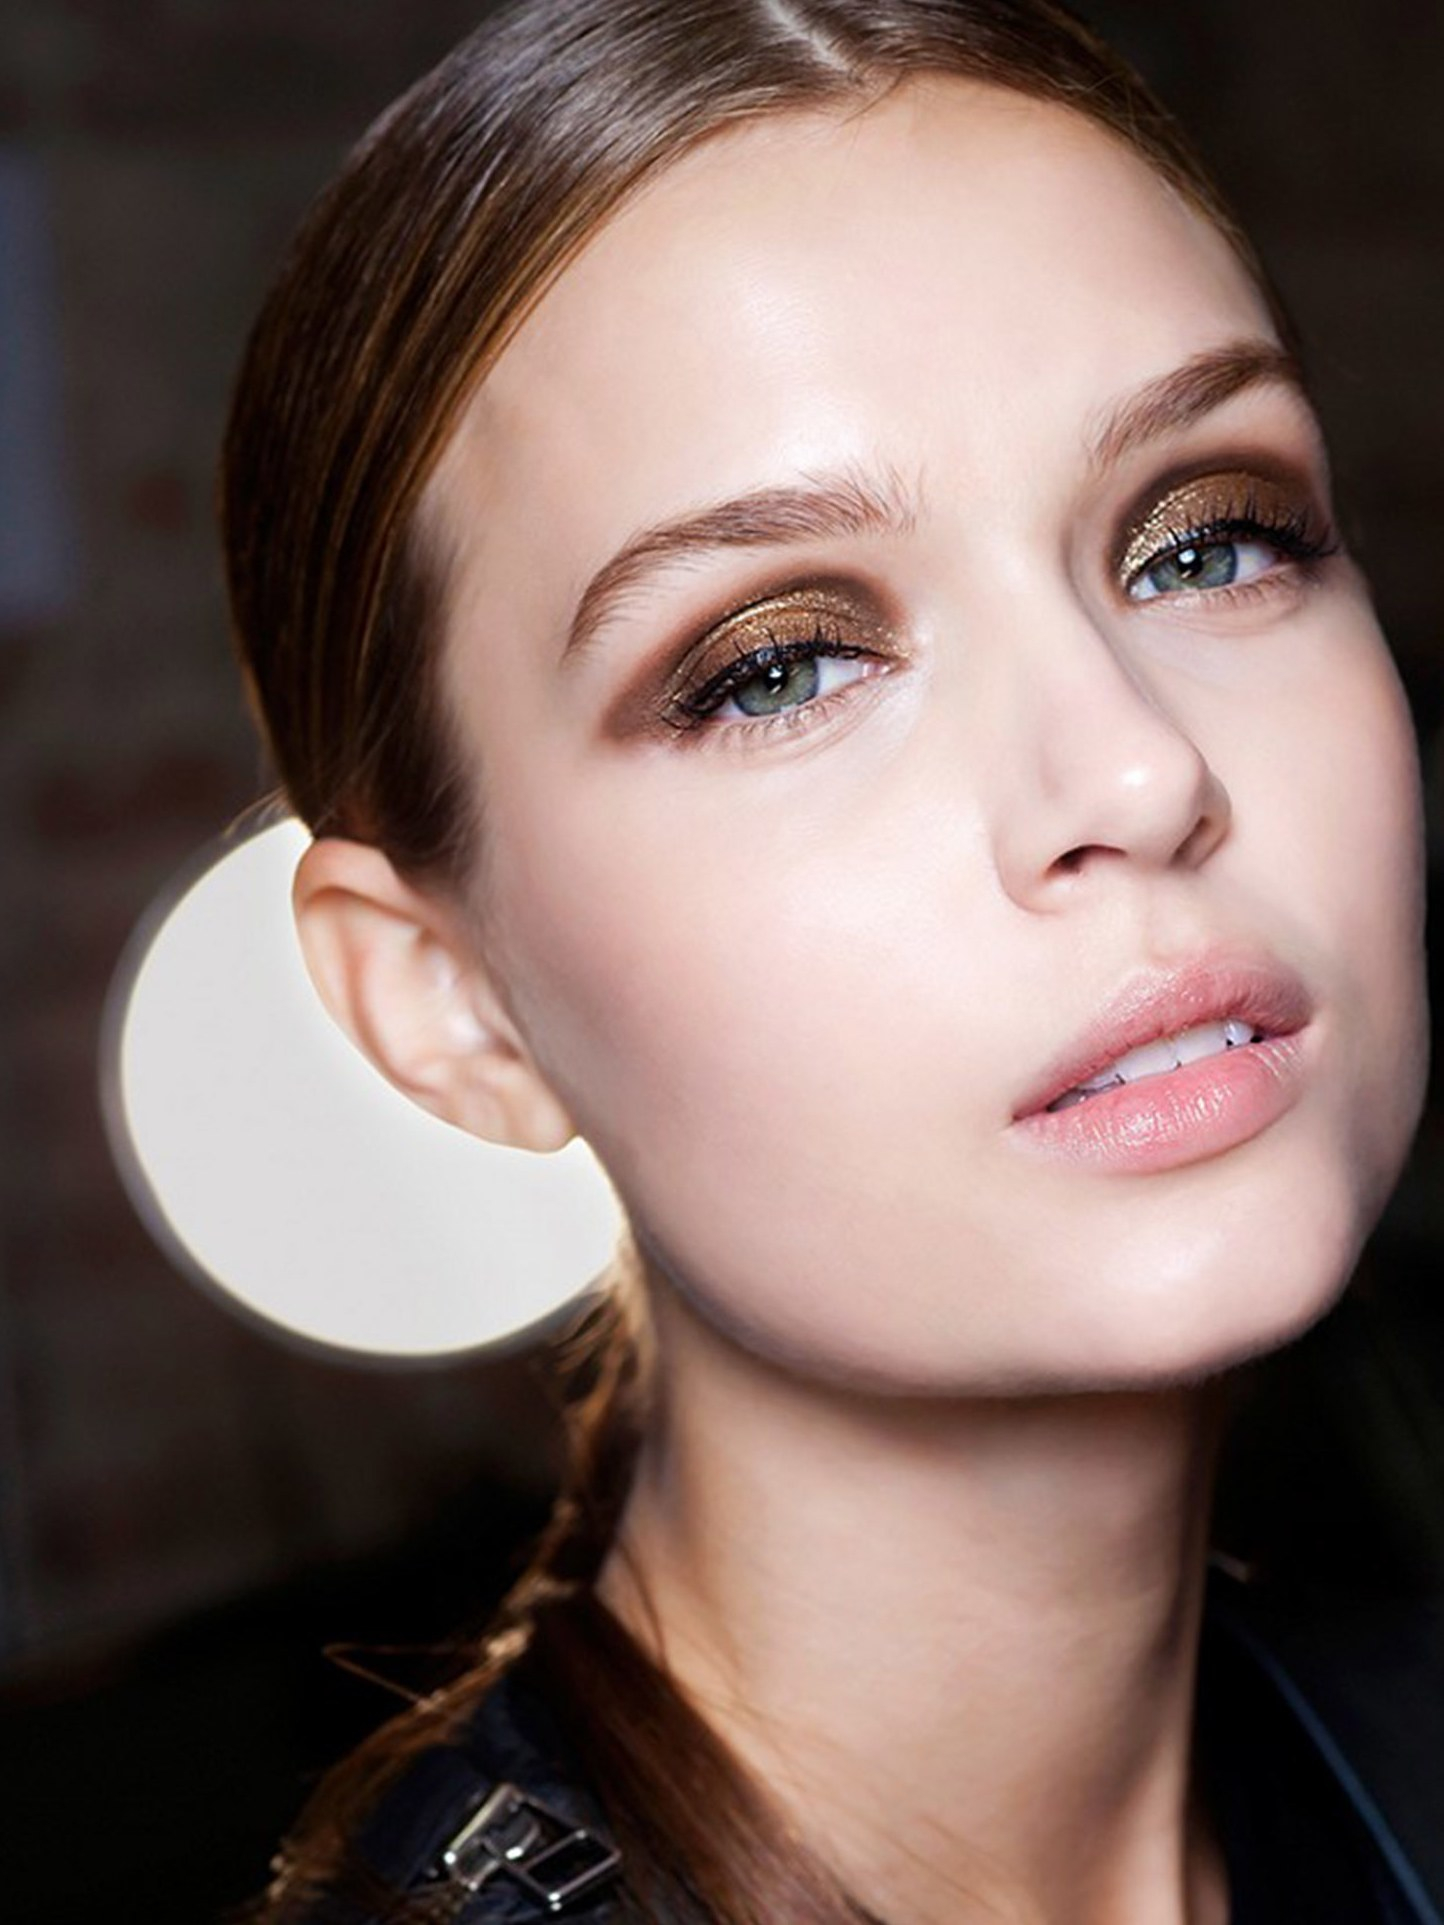 Makeup To Lighten Brown Eyes 11 Ways To Make Your Eyes Look Bigger Allure